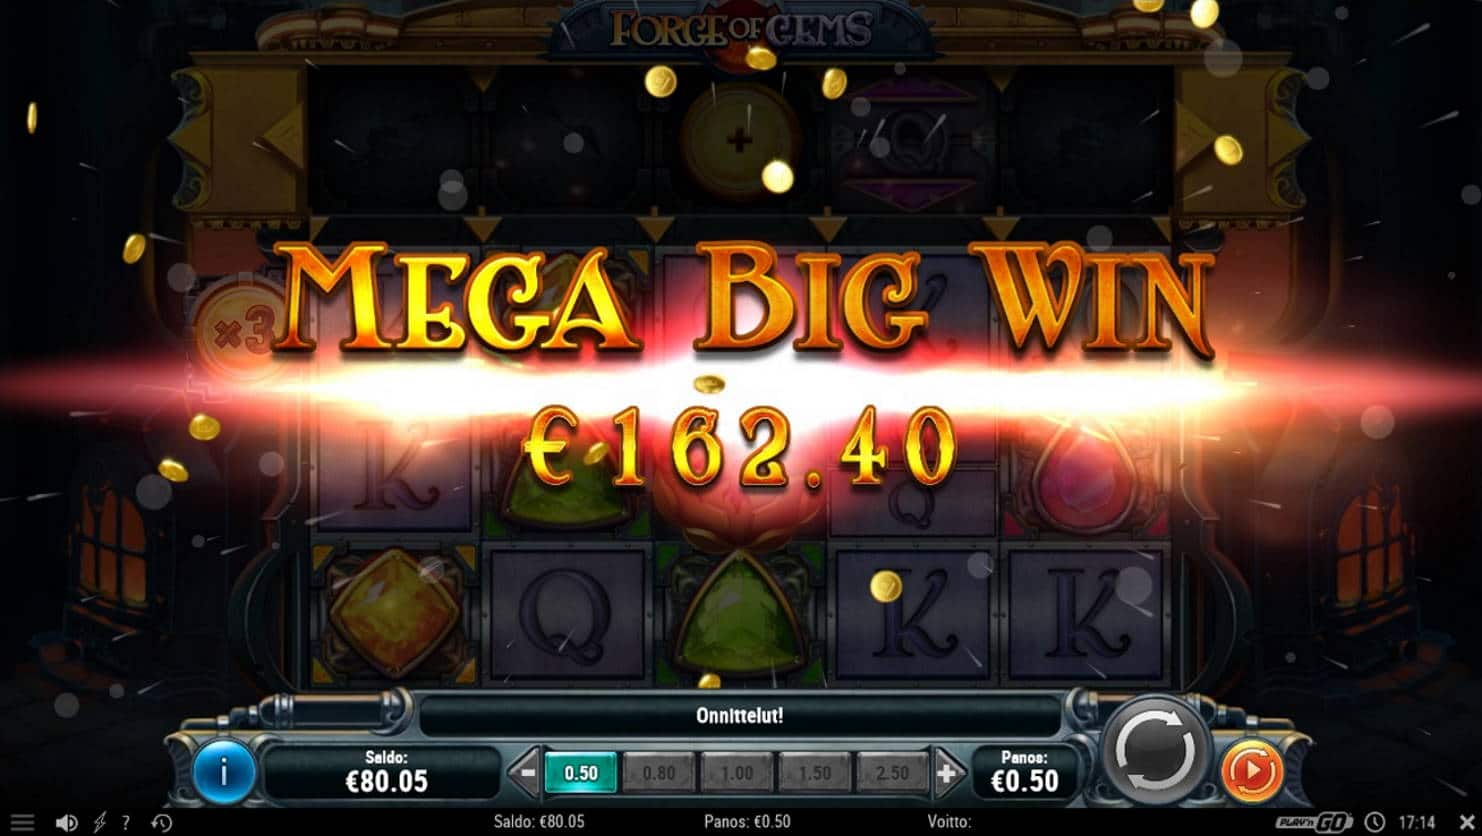 Forge of Gems Casino win picture by MrMork 14.4.2022 162.40e 325X